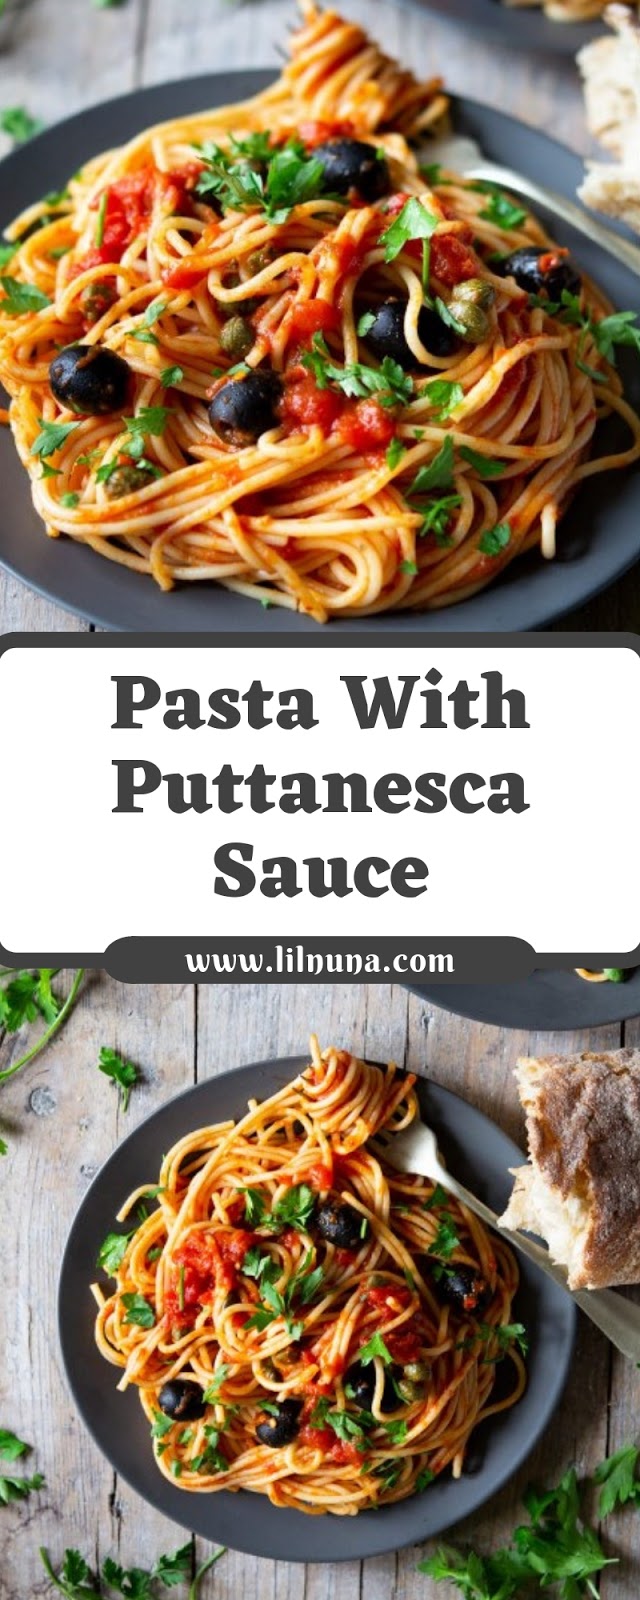 Pasta With Puttanesca Sauce